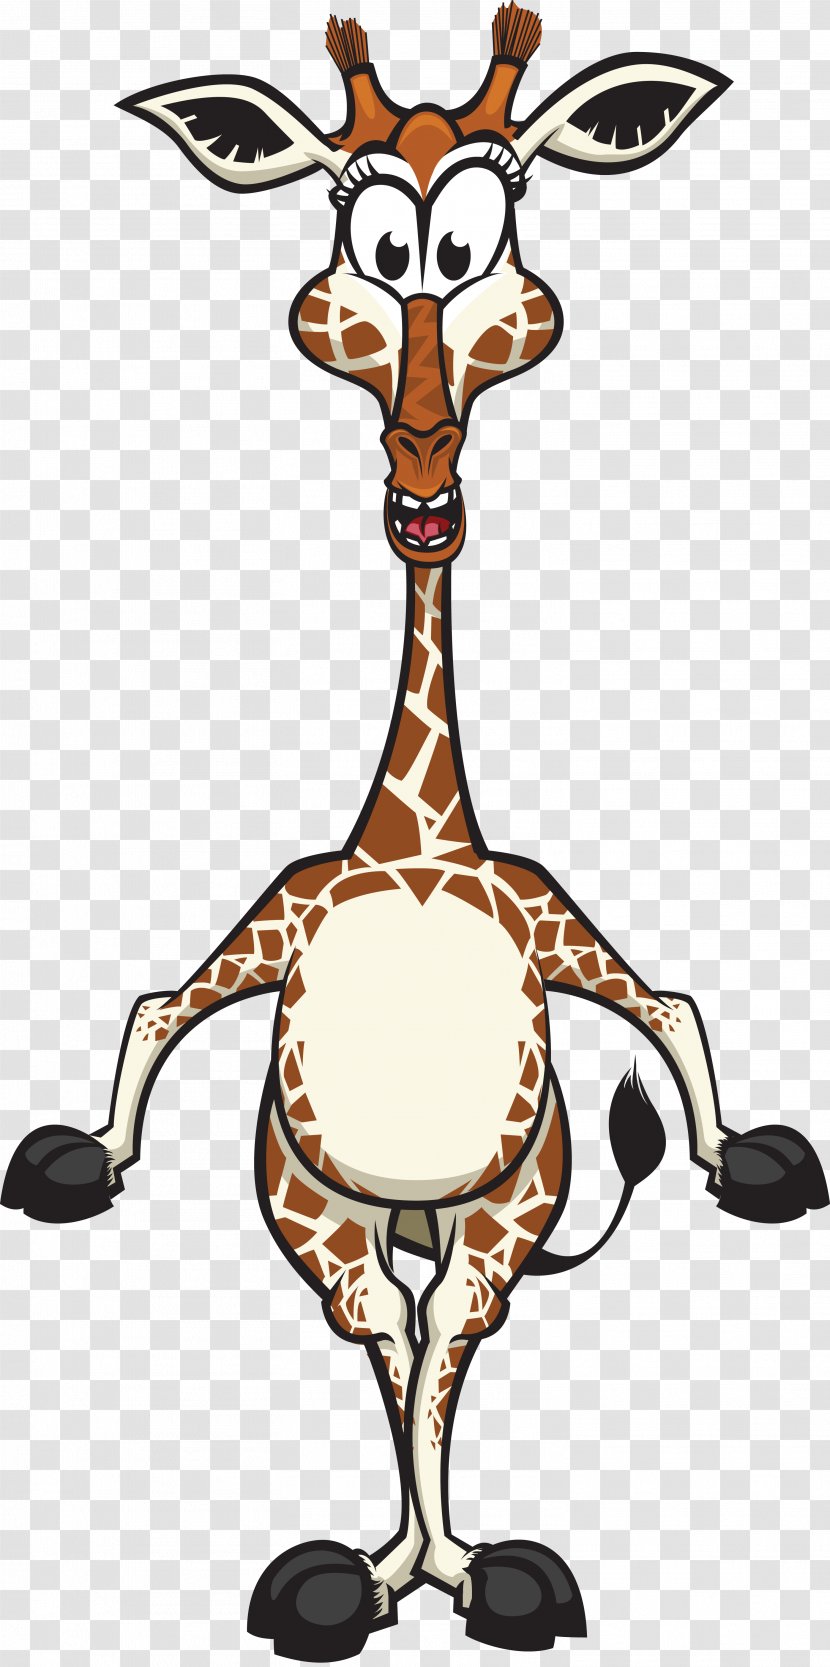 Royalty-free Cartoon - Illustrator - Giraffe Transparent PNG